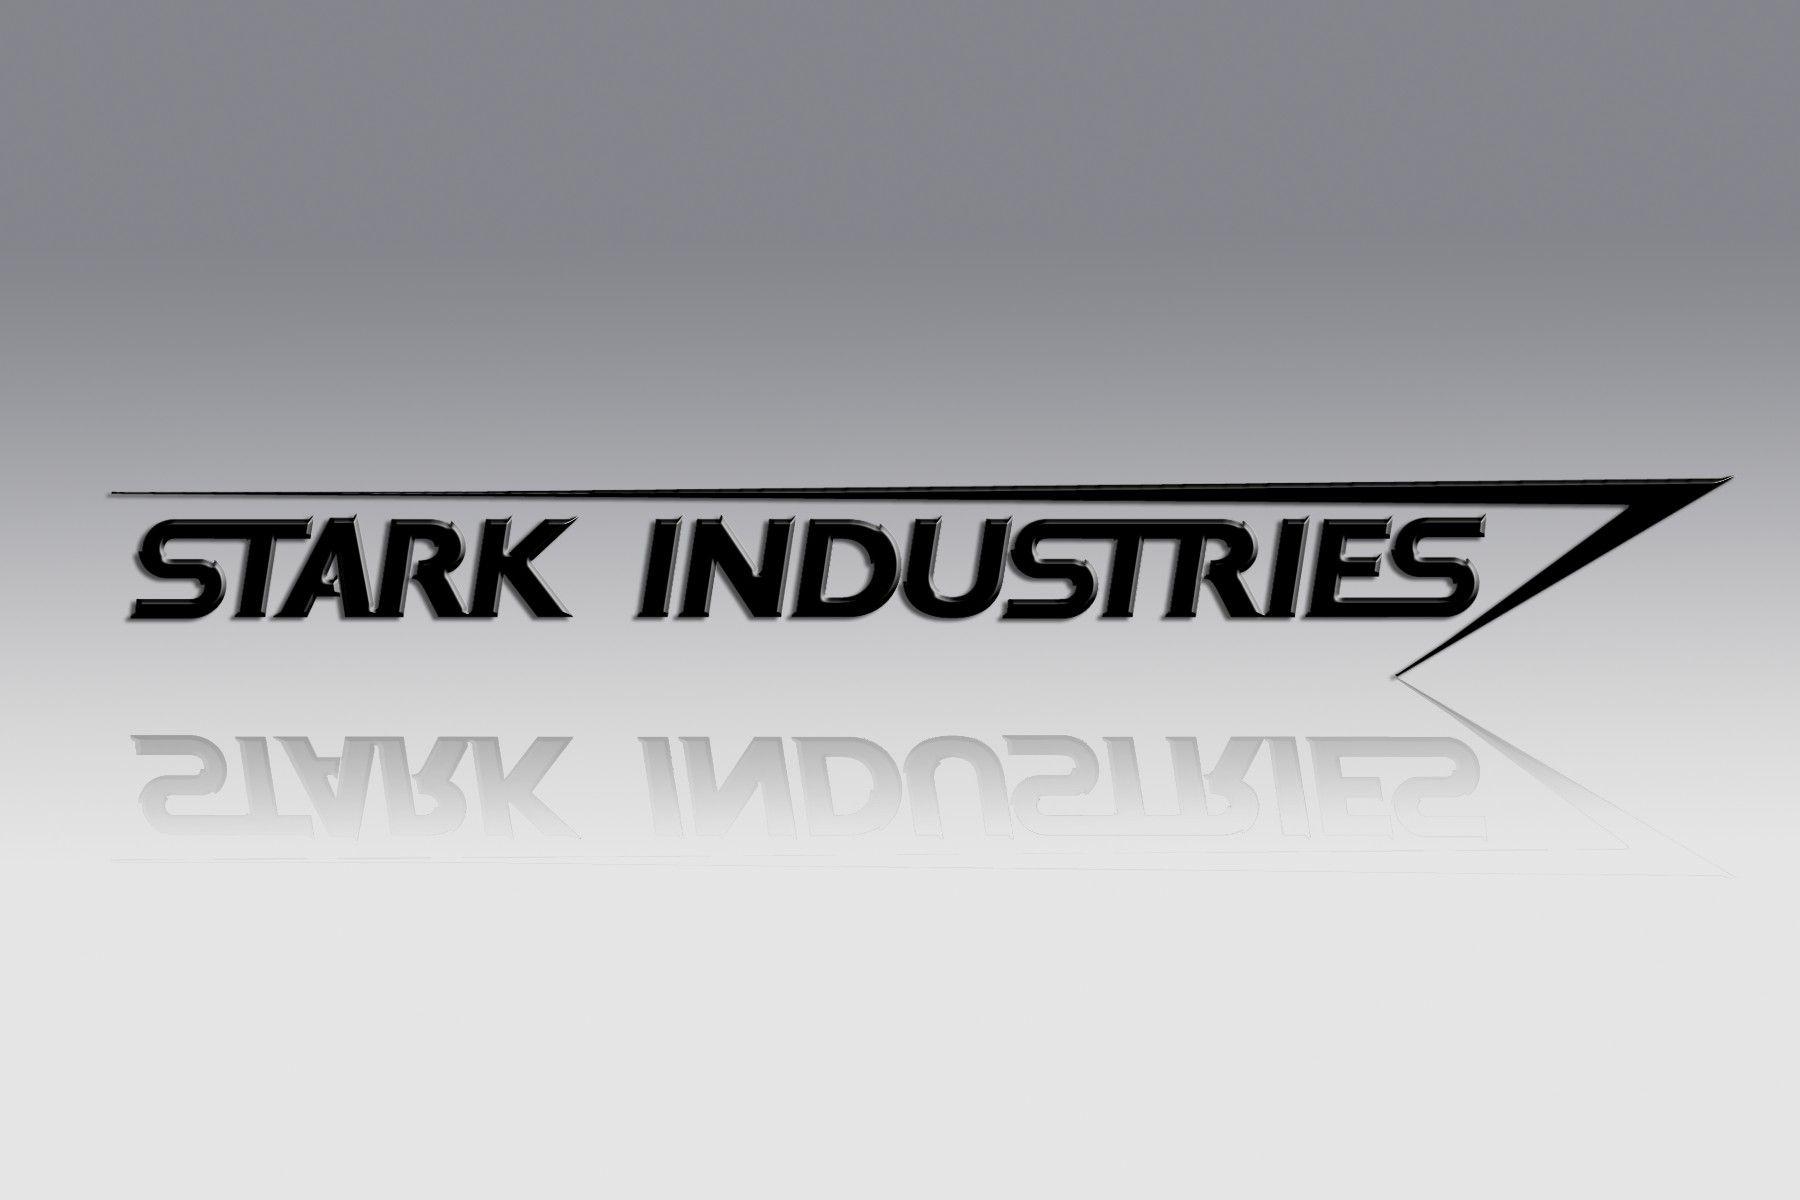 Iron man stark industries wallpaper. PC